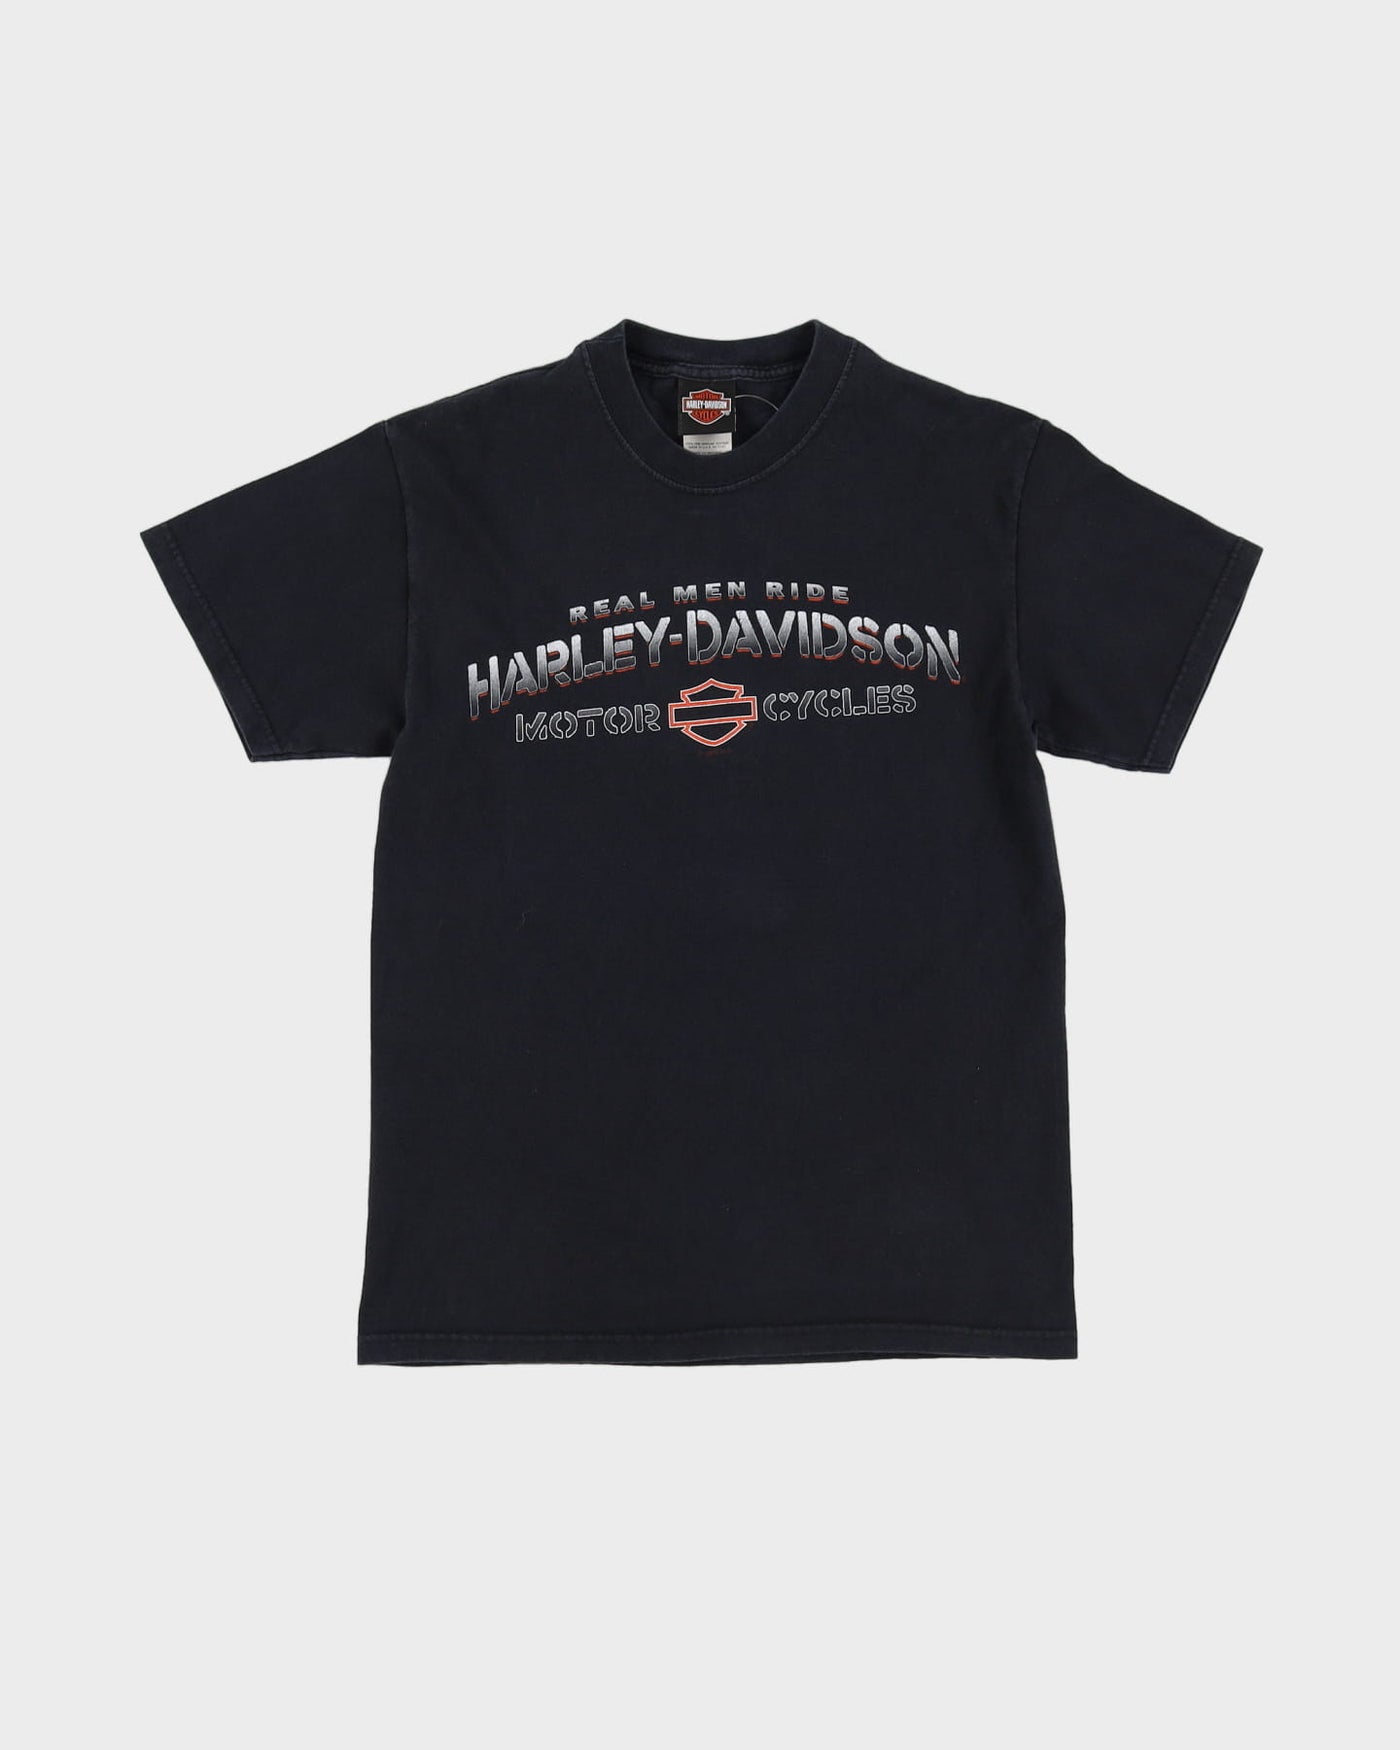 Harley Davidson Real Men Ride Texas Black Graphic T Shirt - M